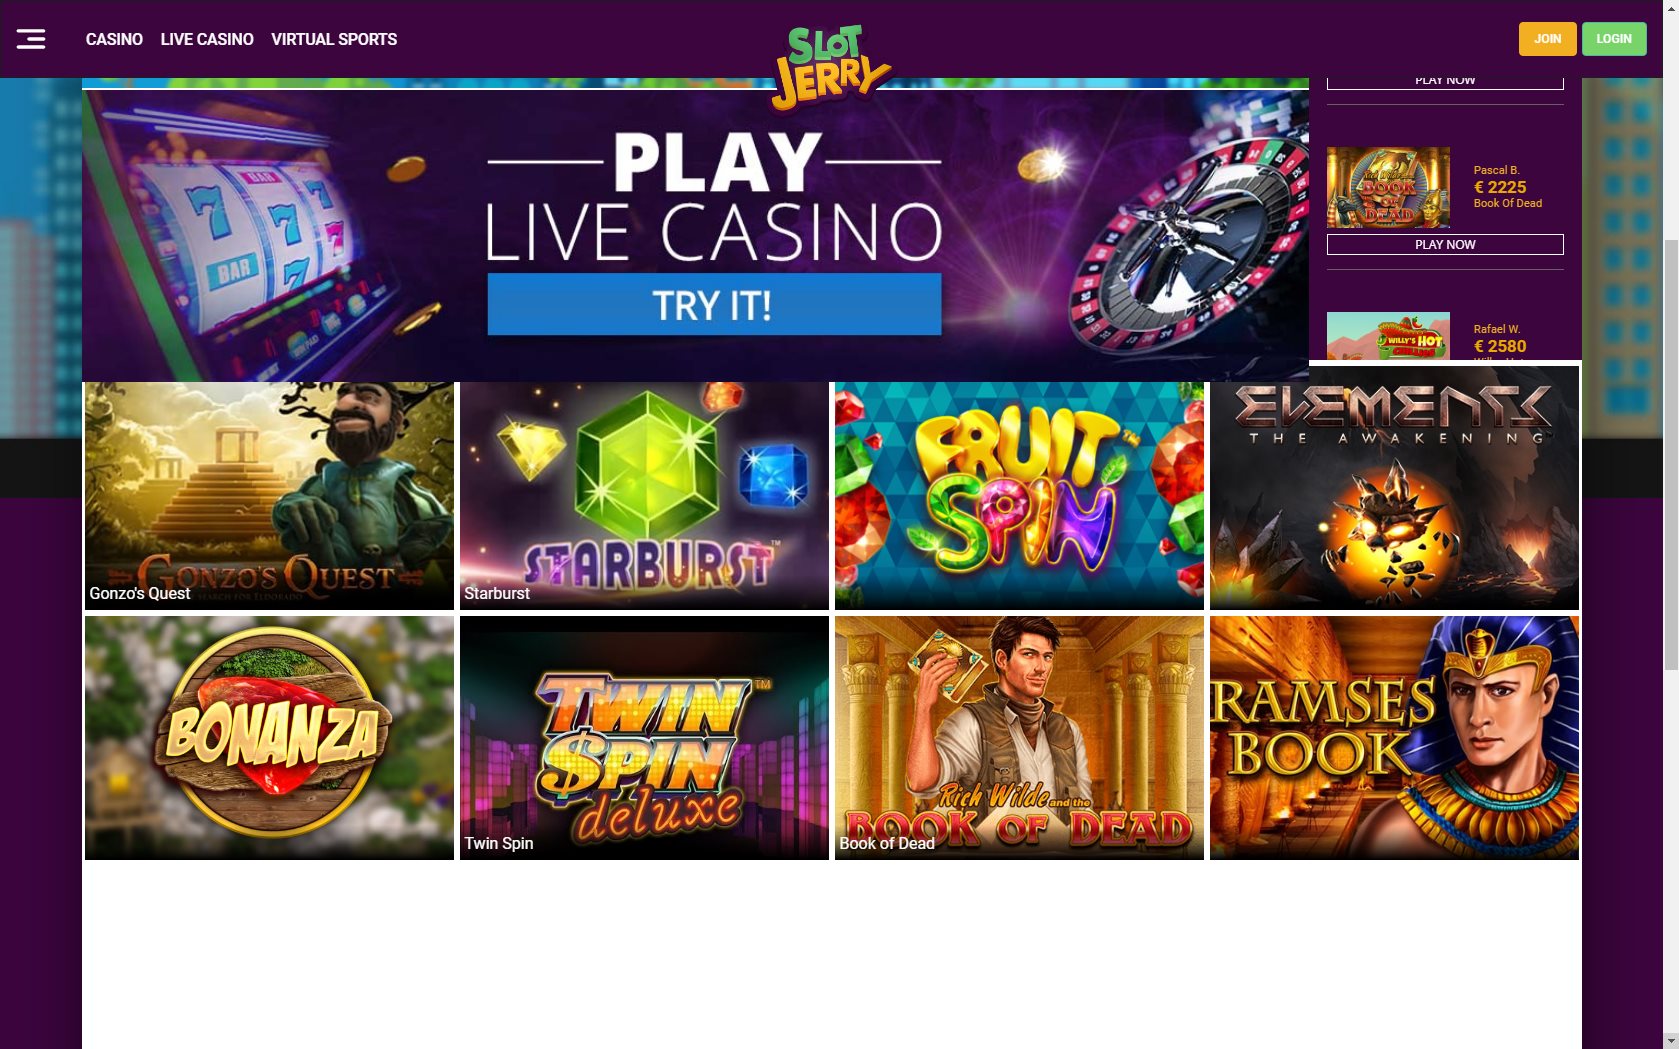 Slotjerry Casino Games